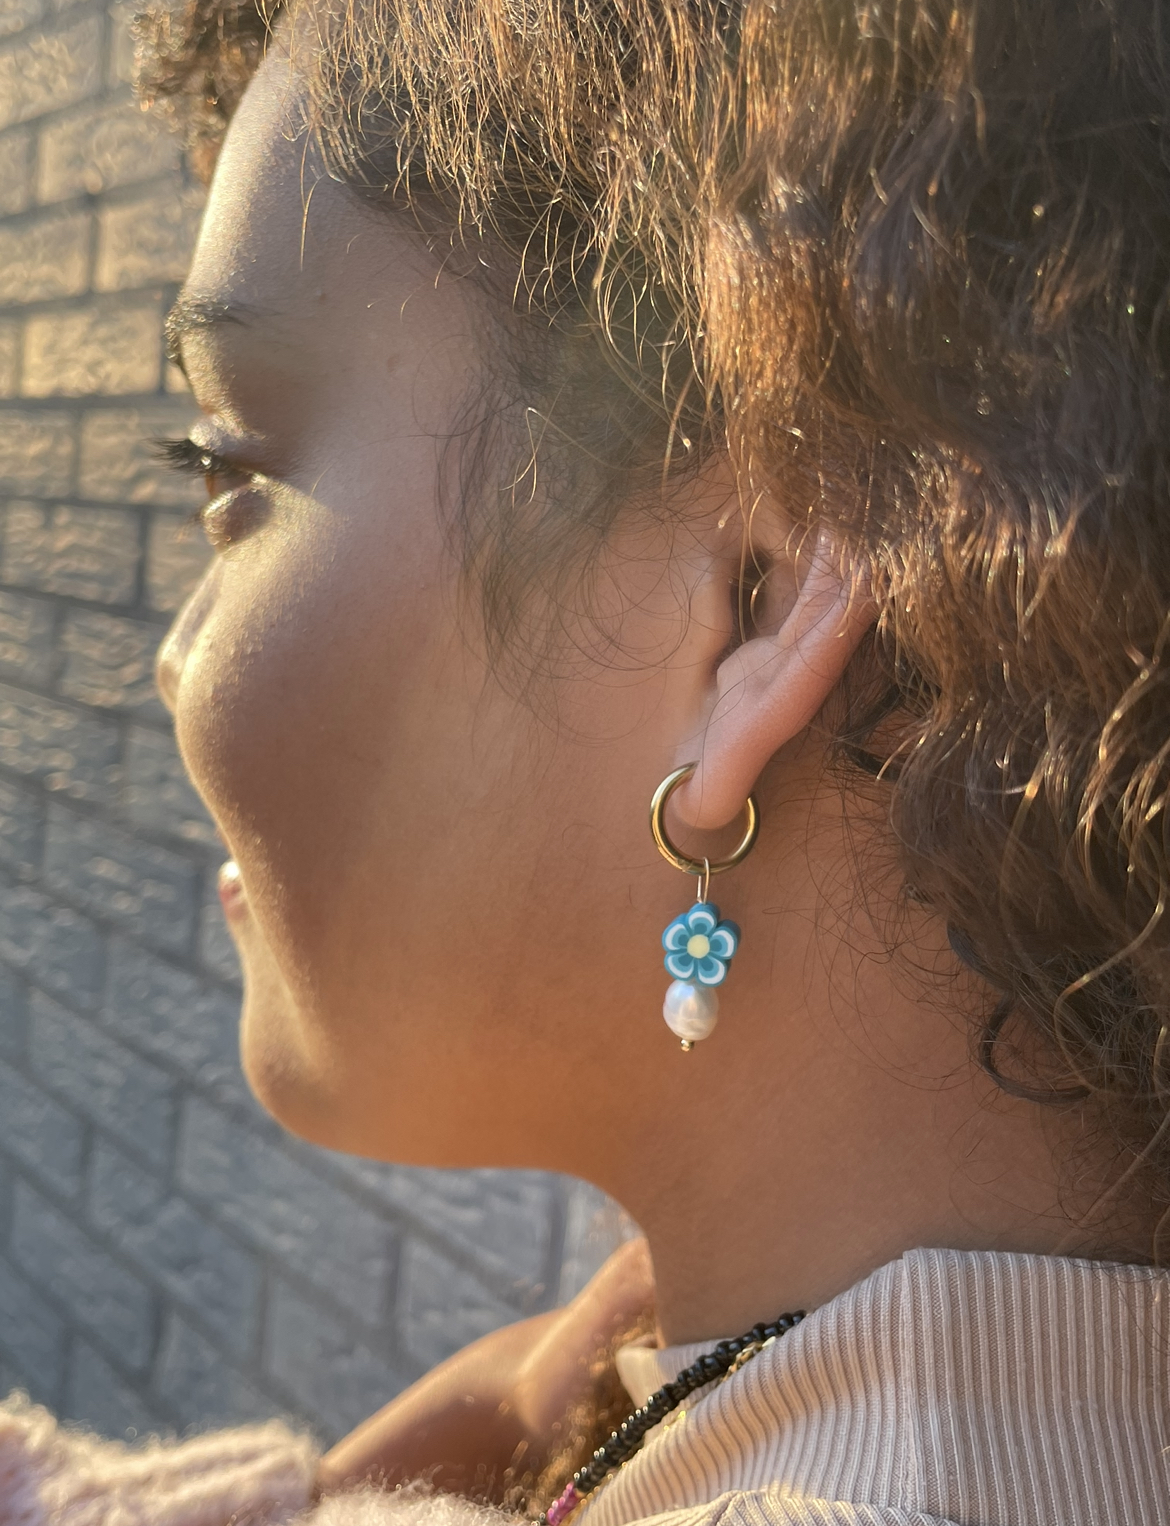 Blue flower earring